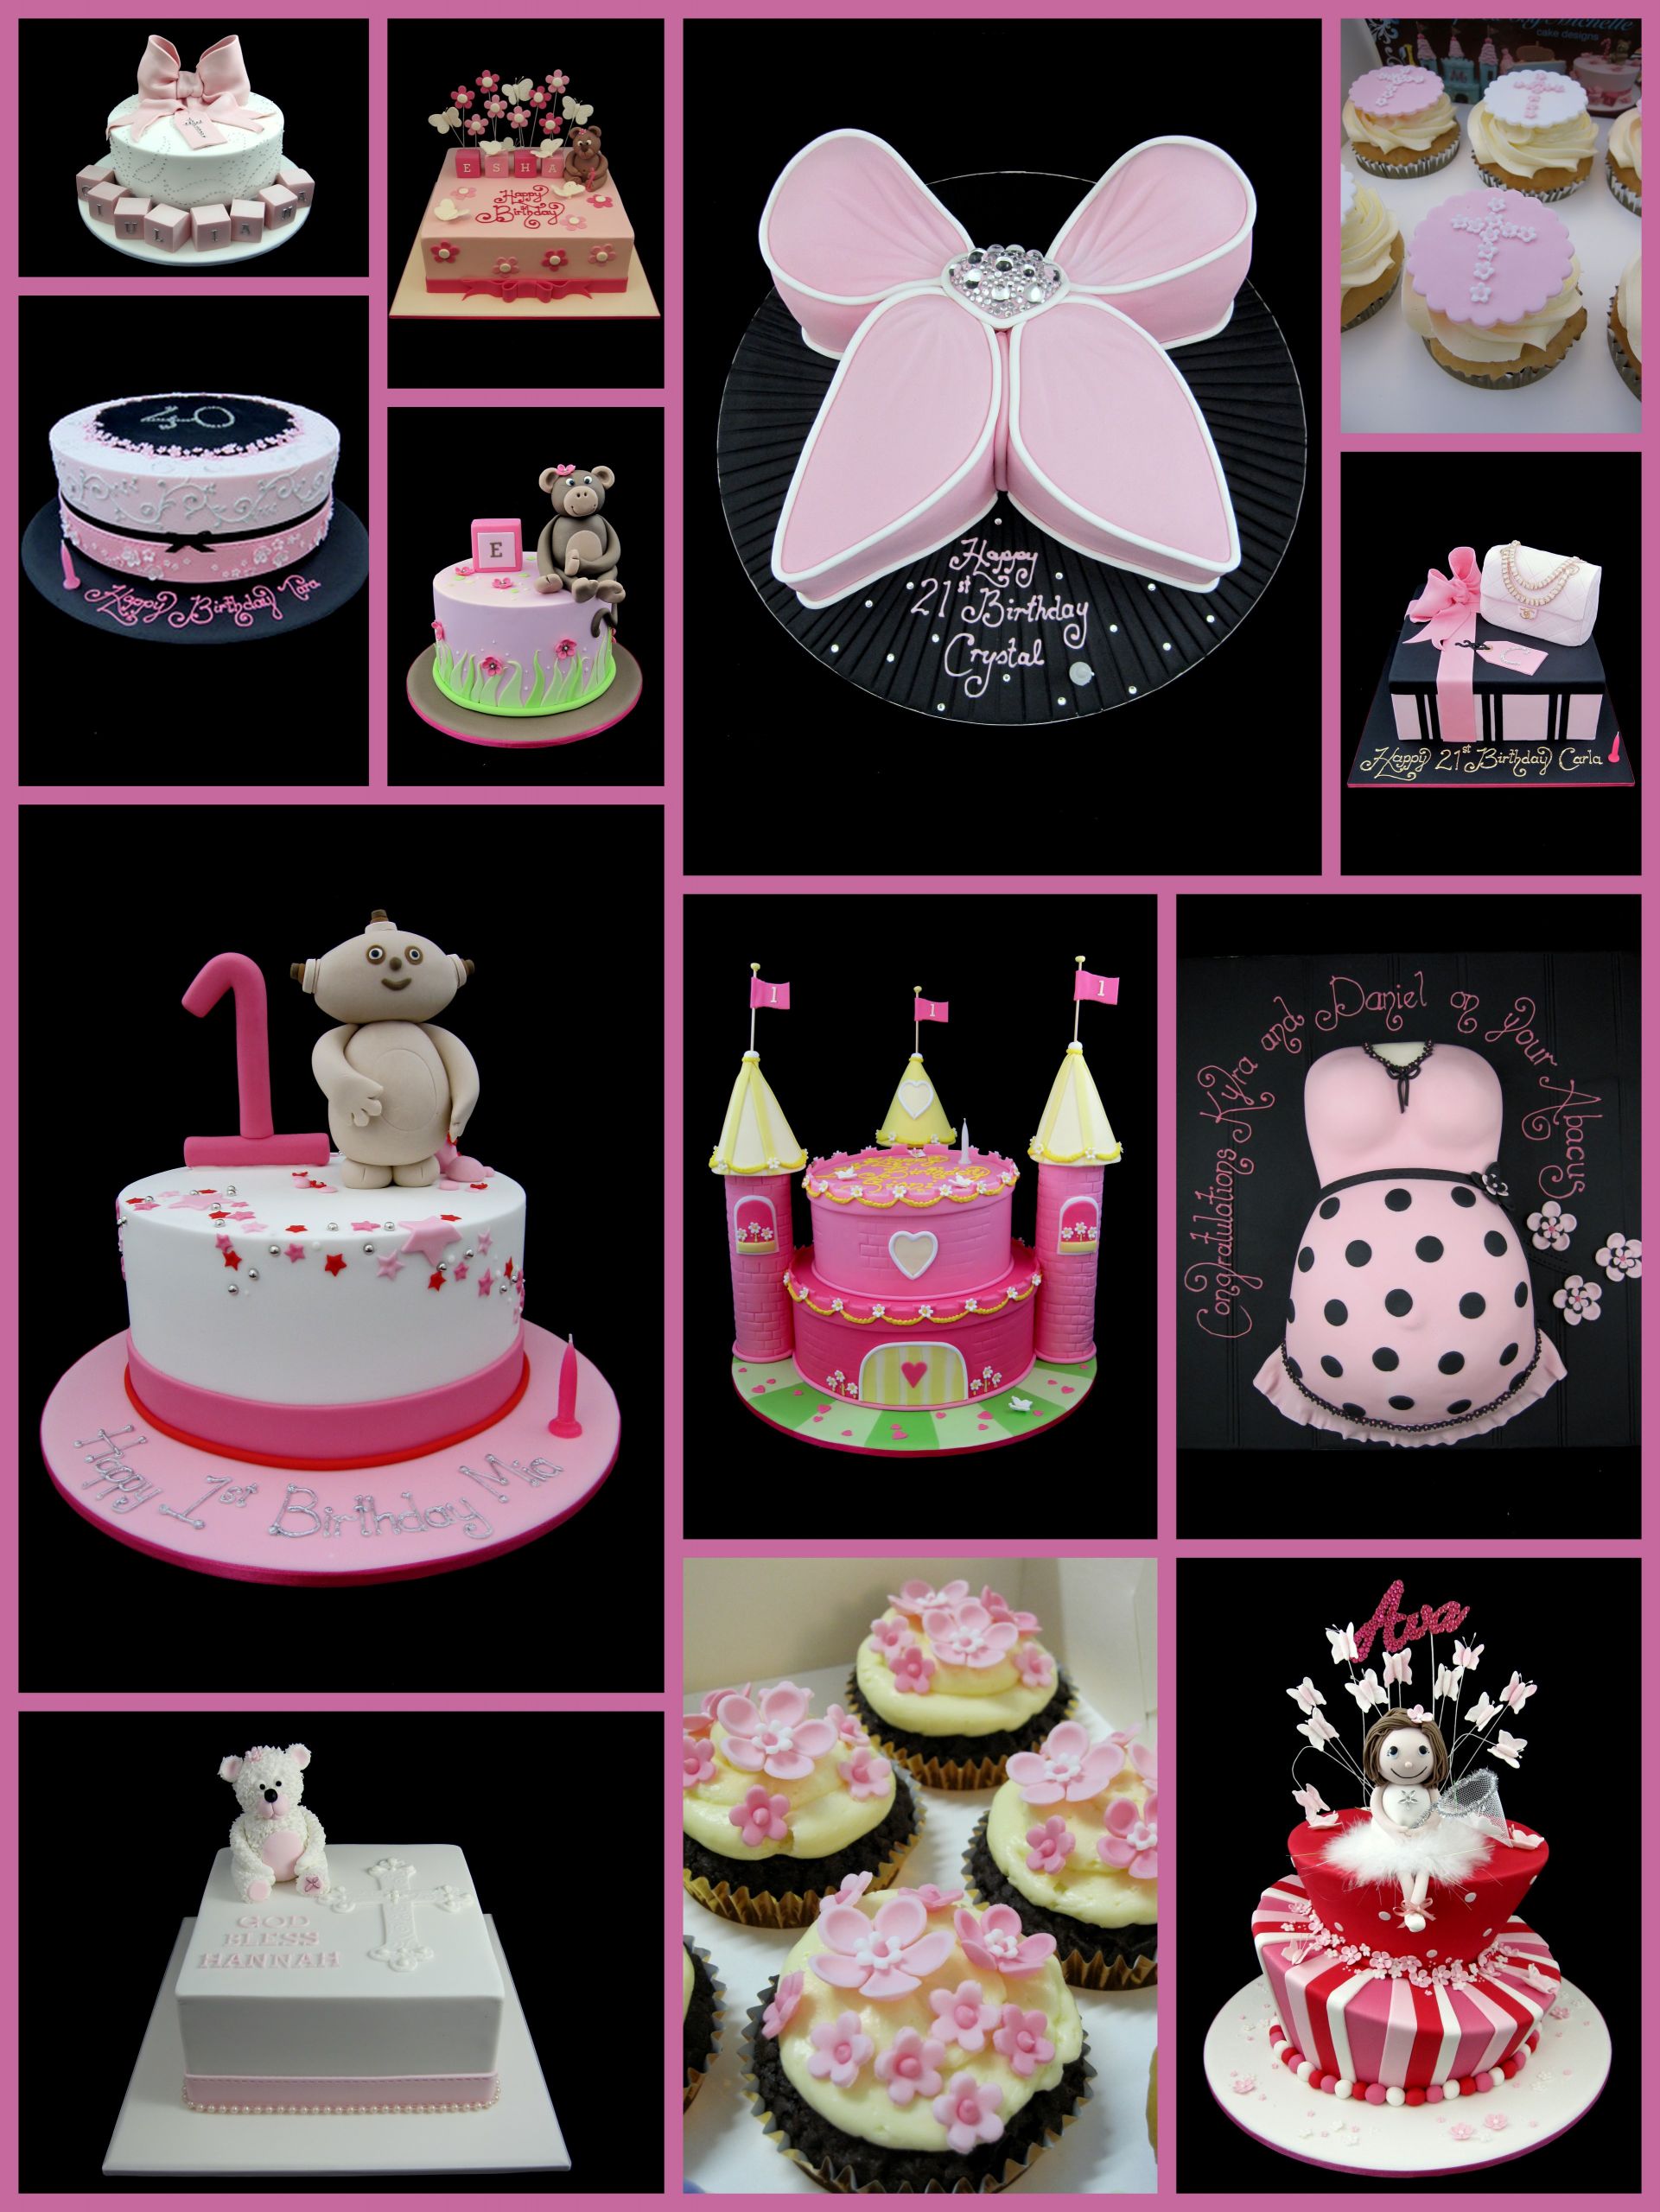 Birthday Cakes Designs
 21st birthday cakes